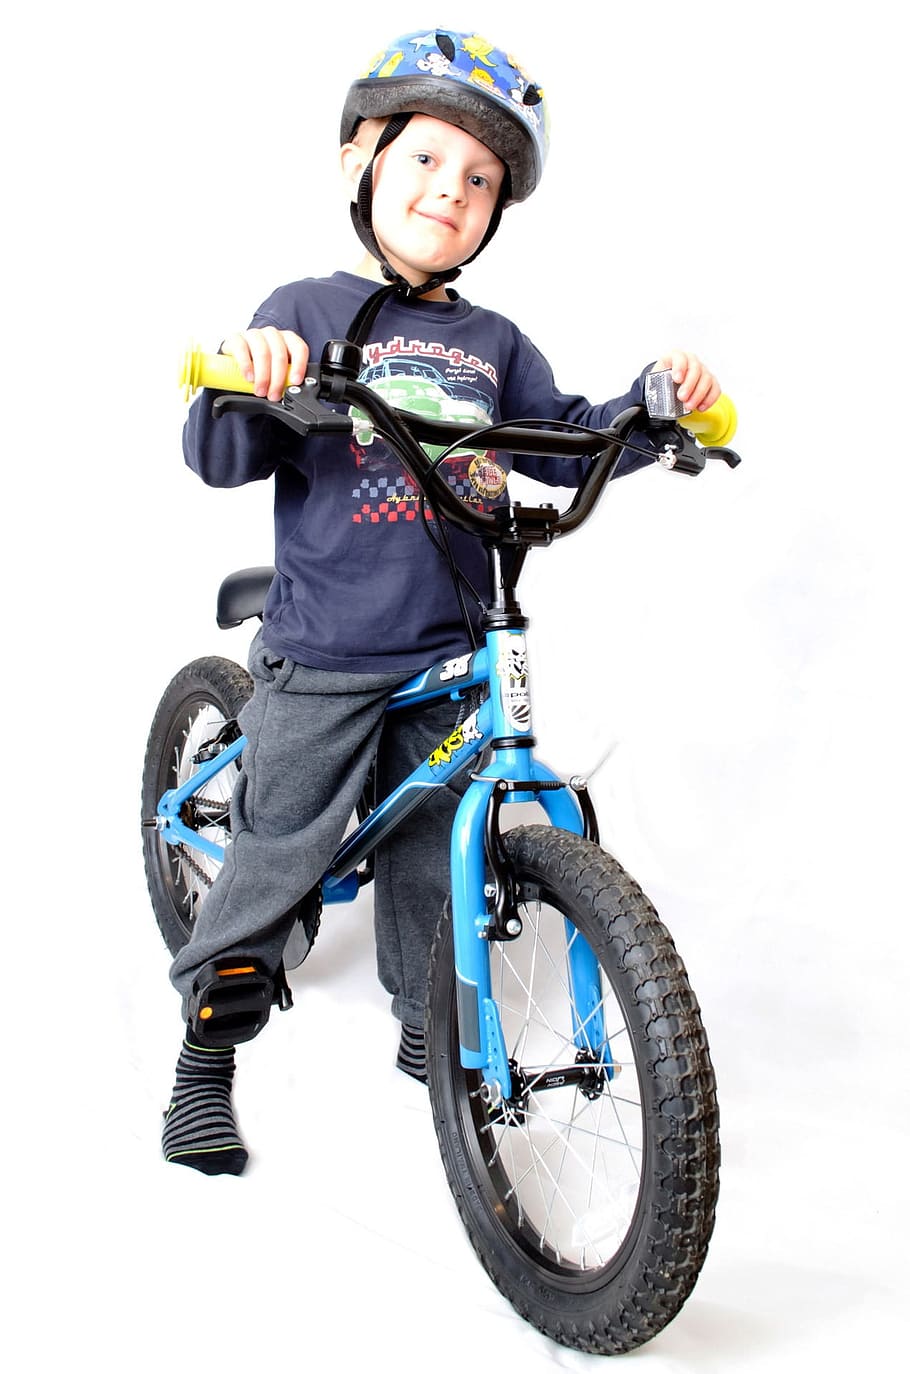 chico, parado, bicicleta bmx, vistiendo, casco, bicicleta, aislado, actividad, niño, blanco